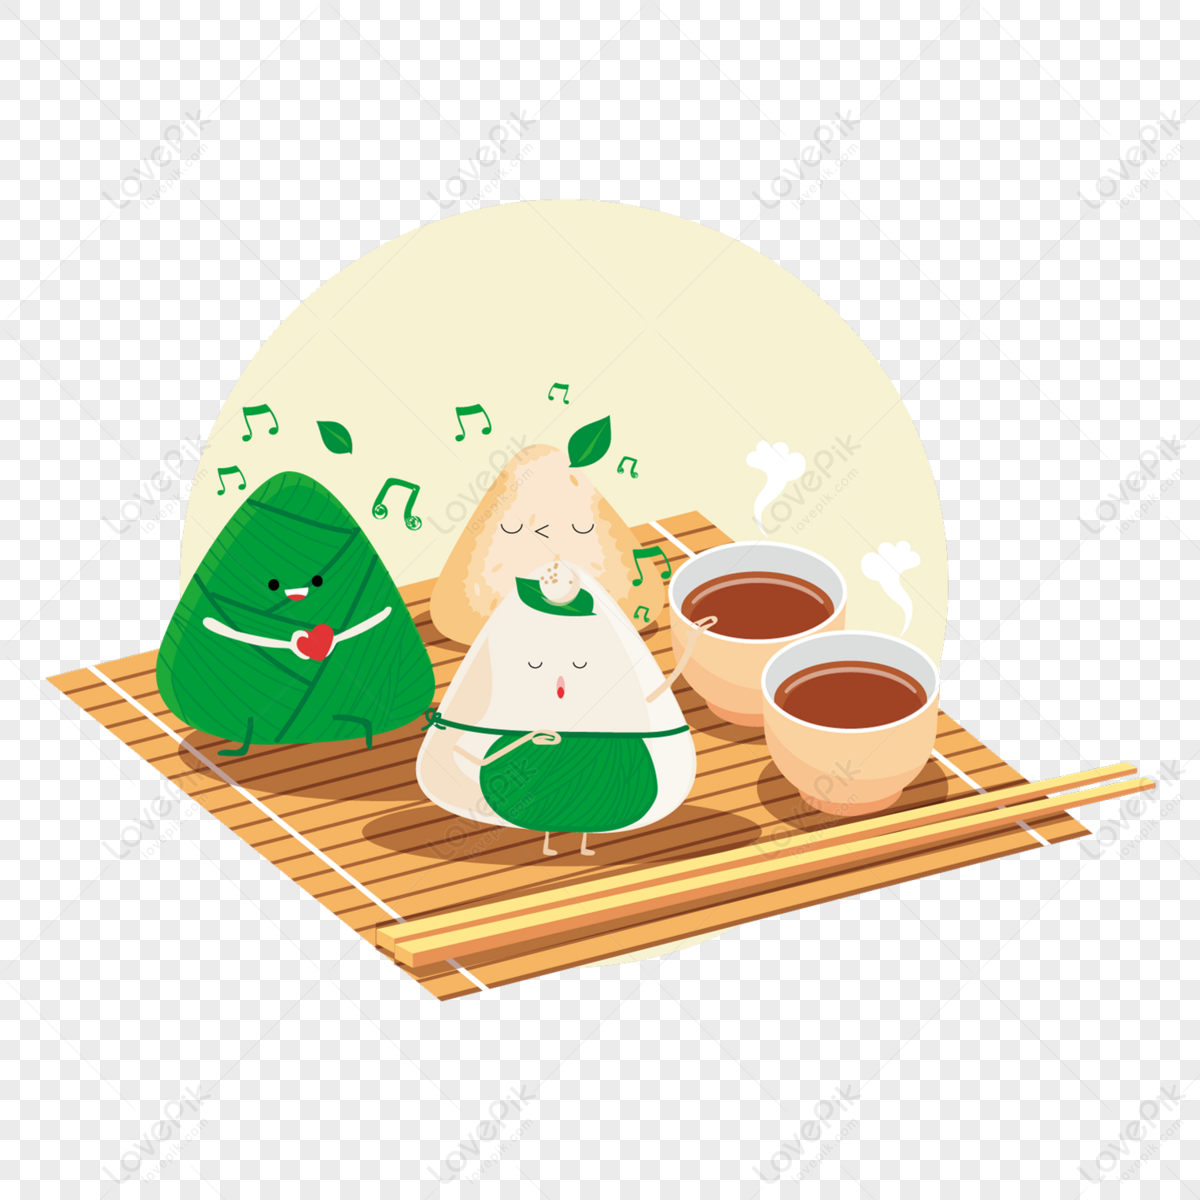 cartoon cute green dragon boat festival dumplings,recipe,graphic png transparent image